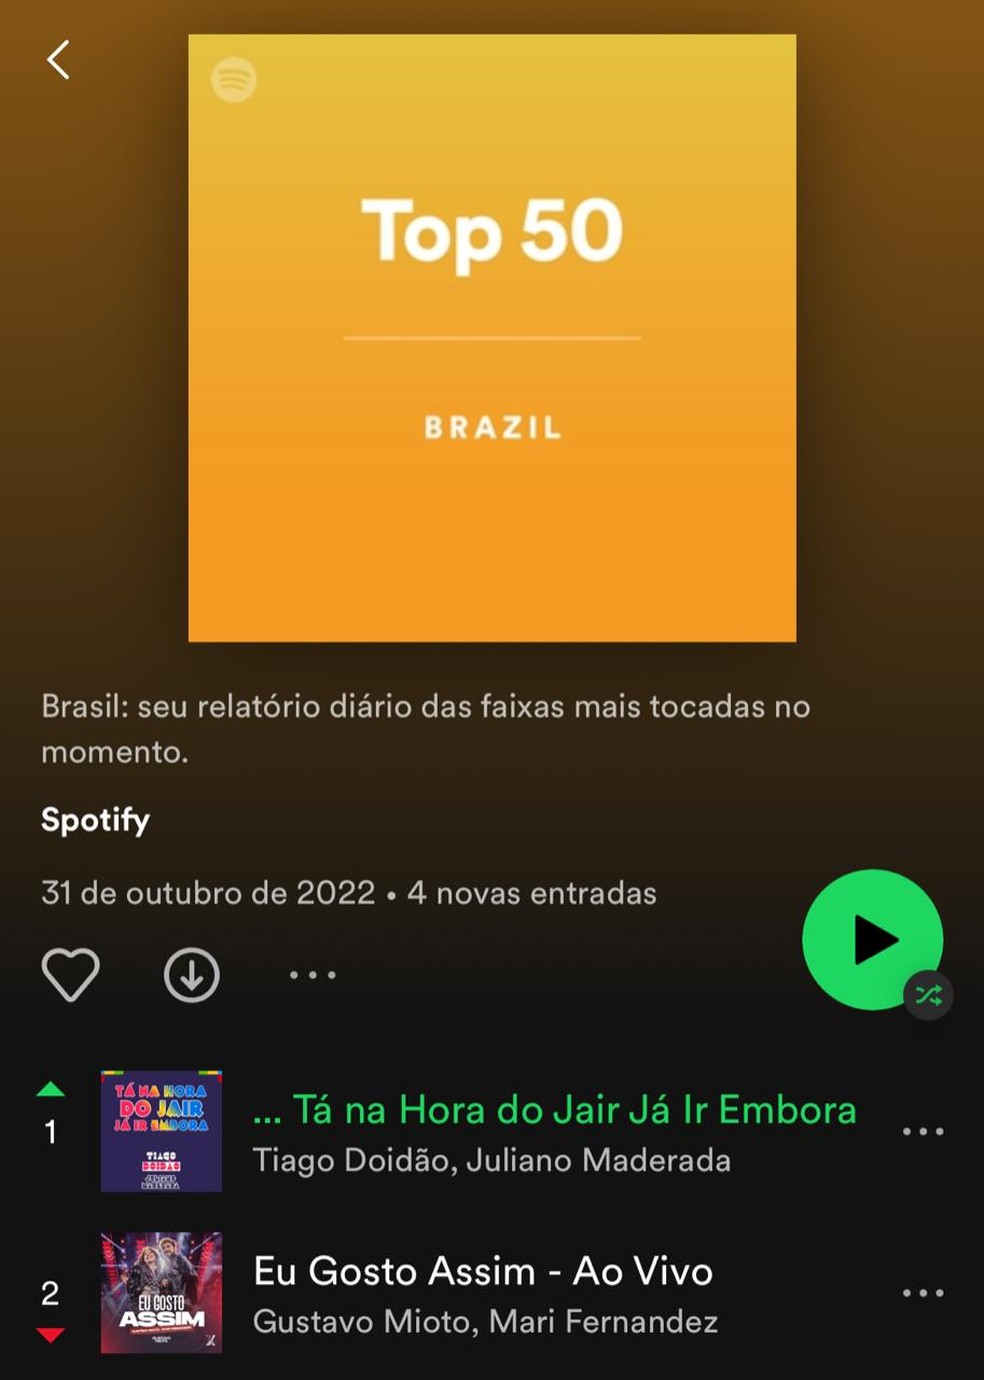 Música 'Tá Na Hora de Jair Já Ir Embora' atinge o 1º lugar no Spotify  Brasil